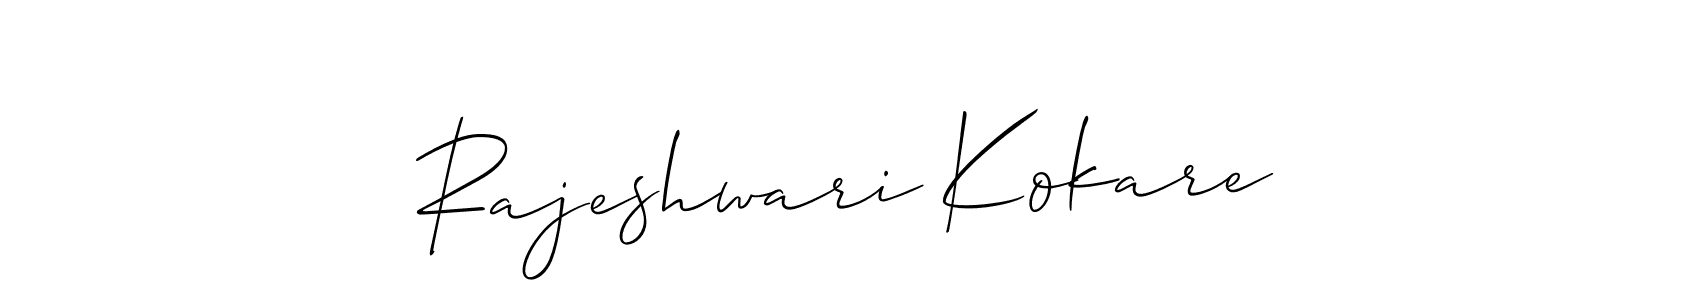 How to make Rajeshwari Kokare signature? Allison_Script is a professional autograph style. Create handwritten signature for Rajeshwari Kokare name. Rajeshwari Kokare signature style 2 images and pictures png